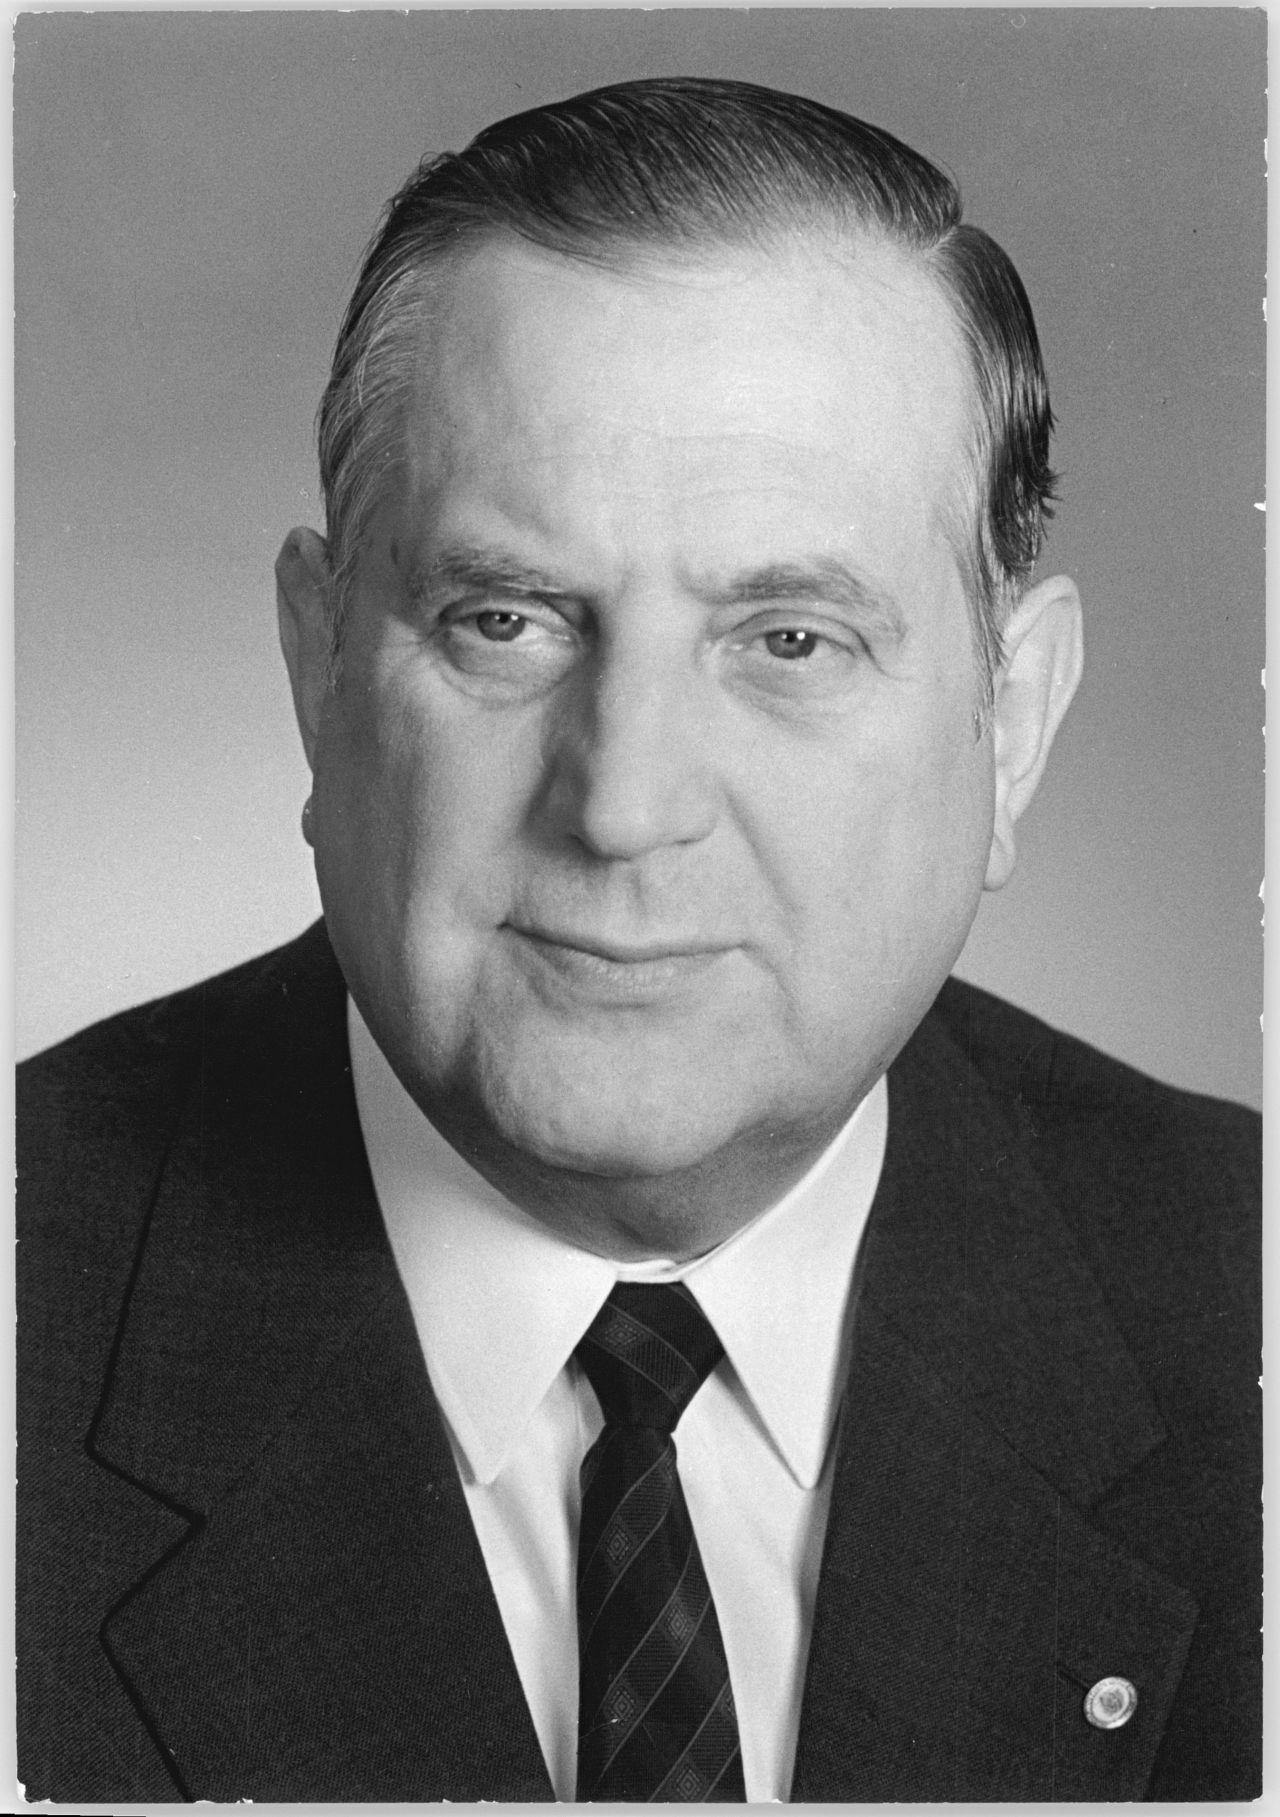 Porträtfoto des SED-Politikers Alexander Schalck-Golodkowski, 1988.